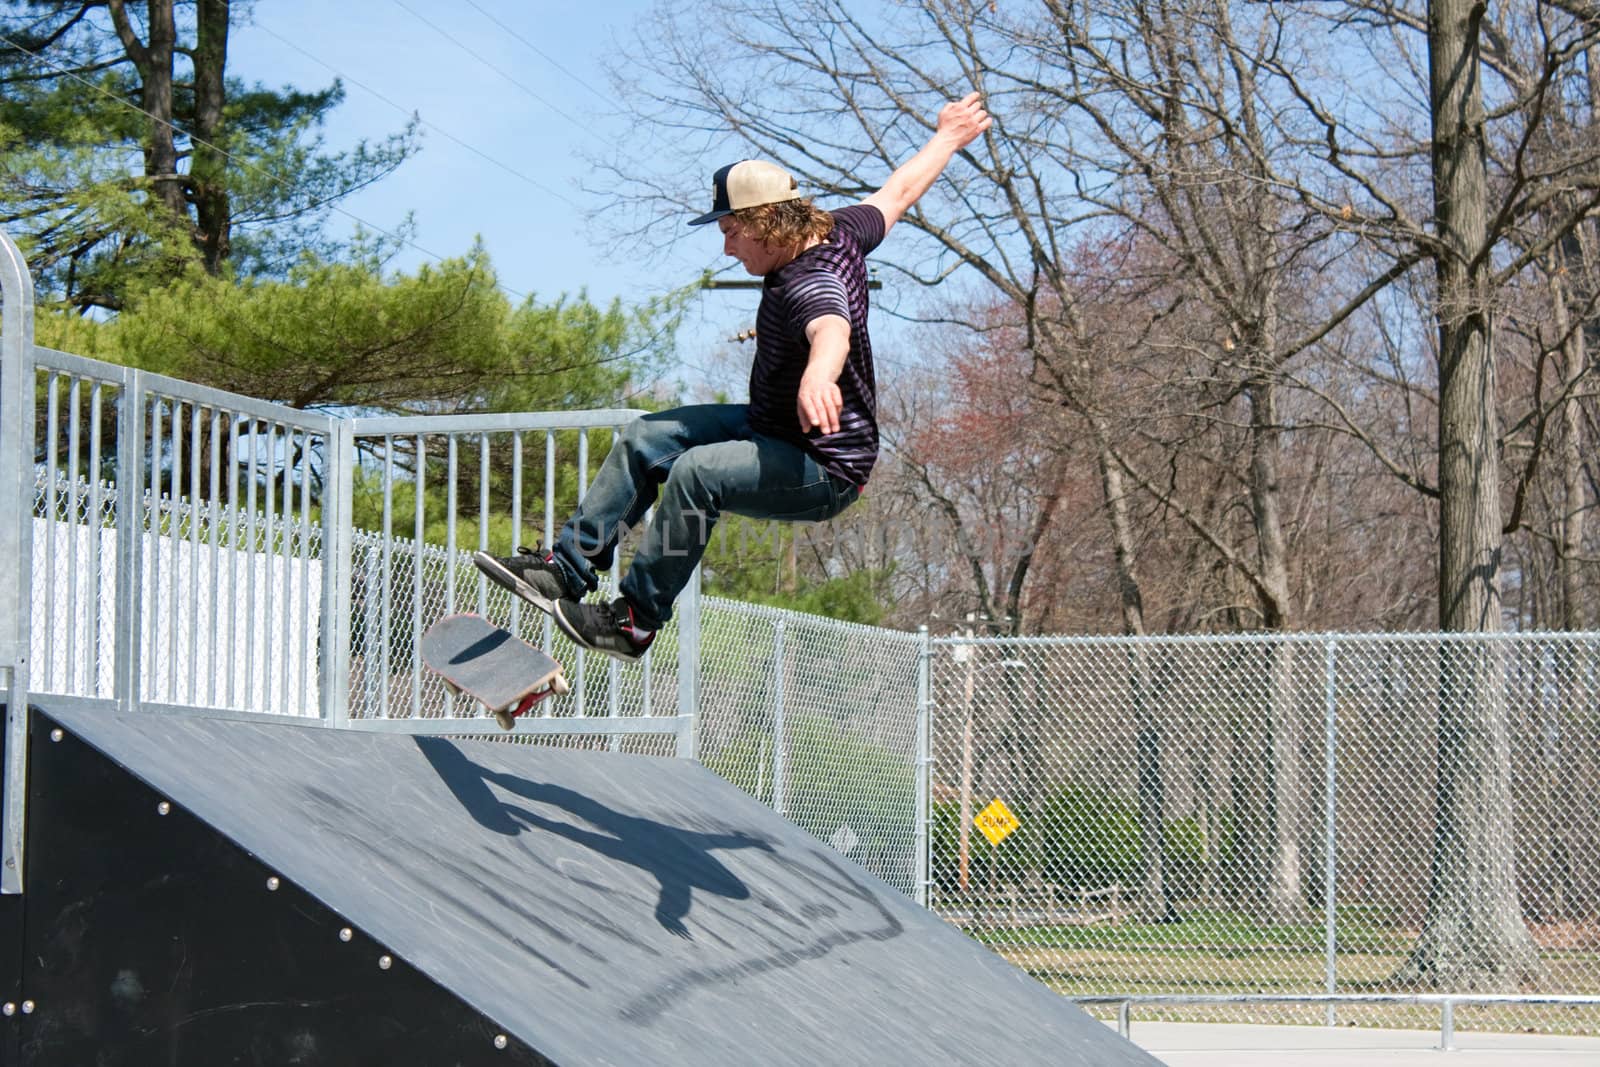 Action shot of a skateboarder on a skateboarding ramp at the skate park.